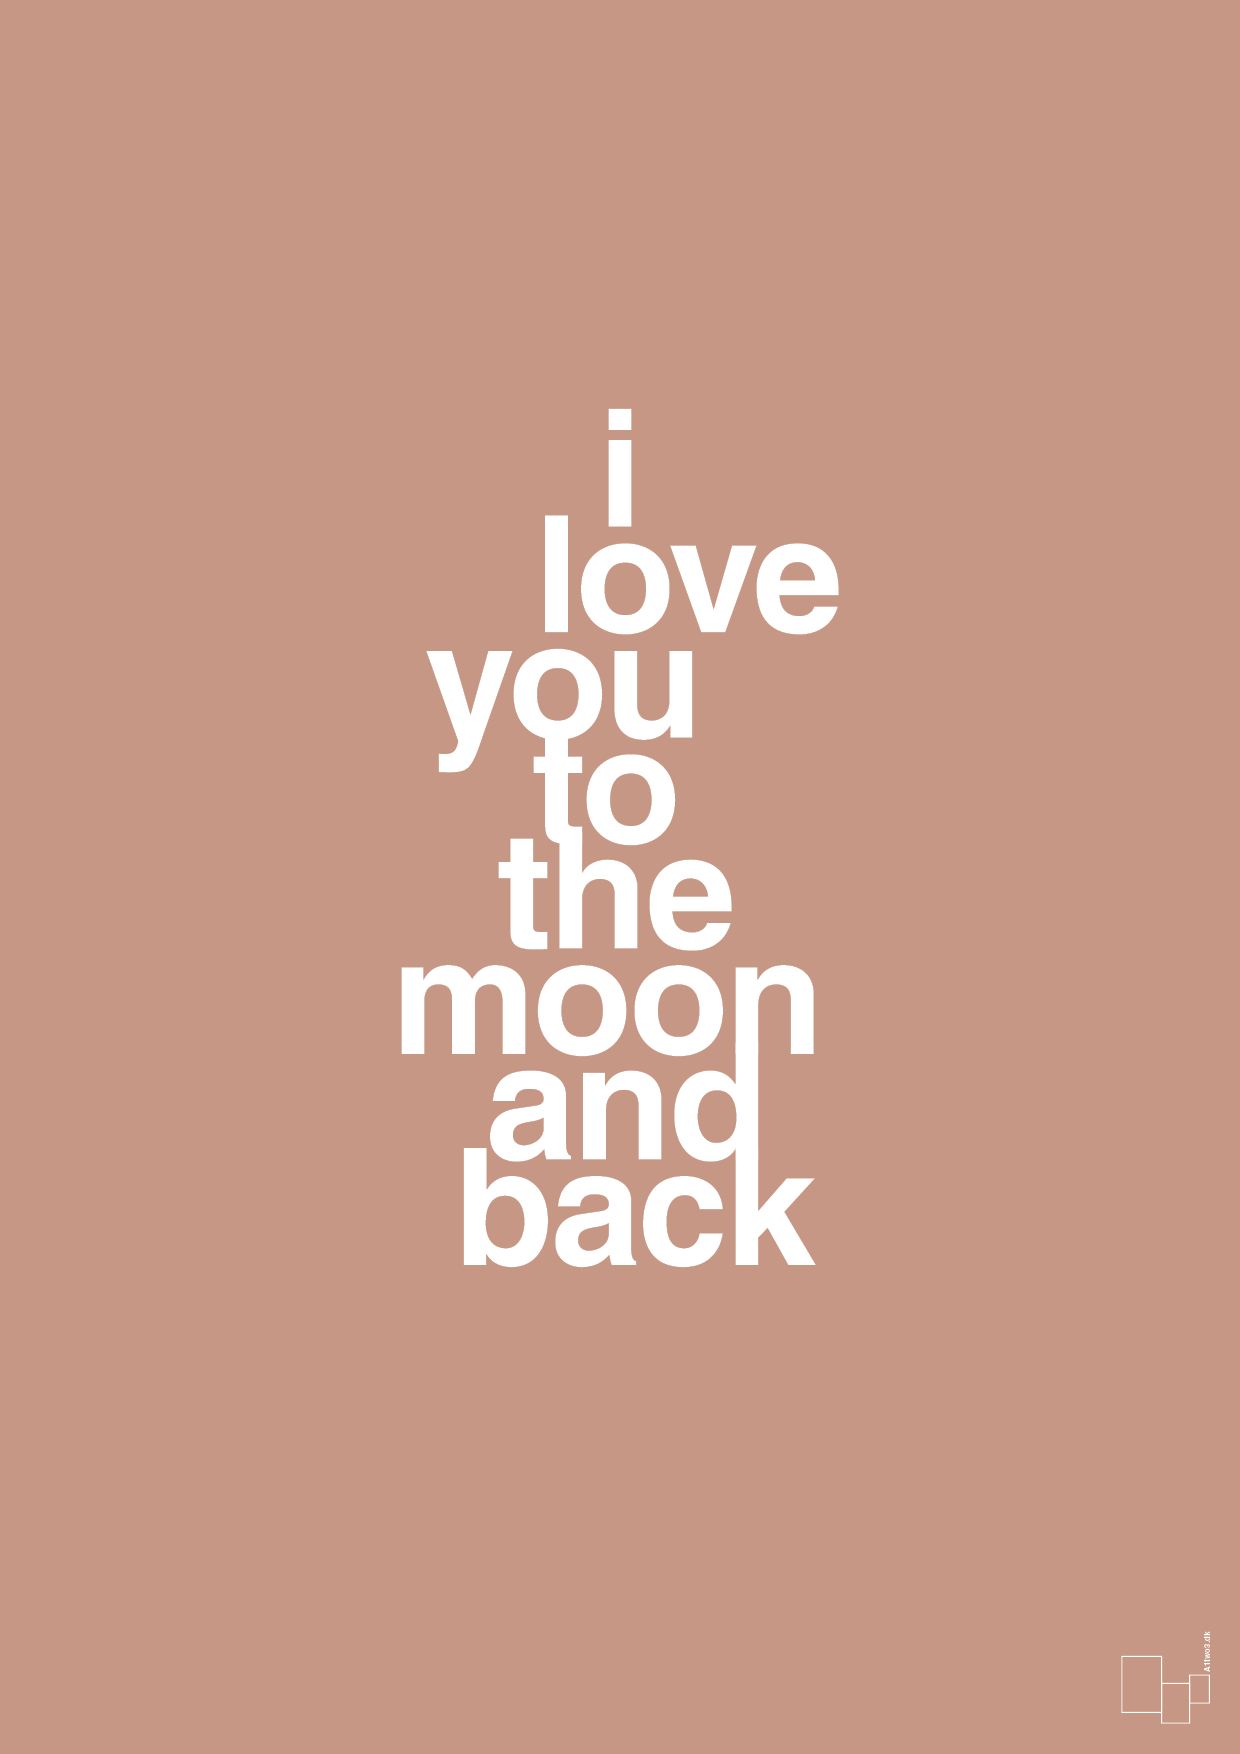 i love you to the moon and back - Plakat med Ordsprog i Powder